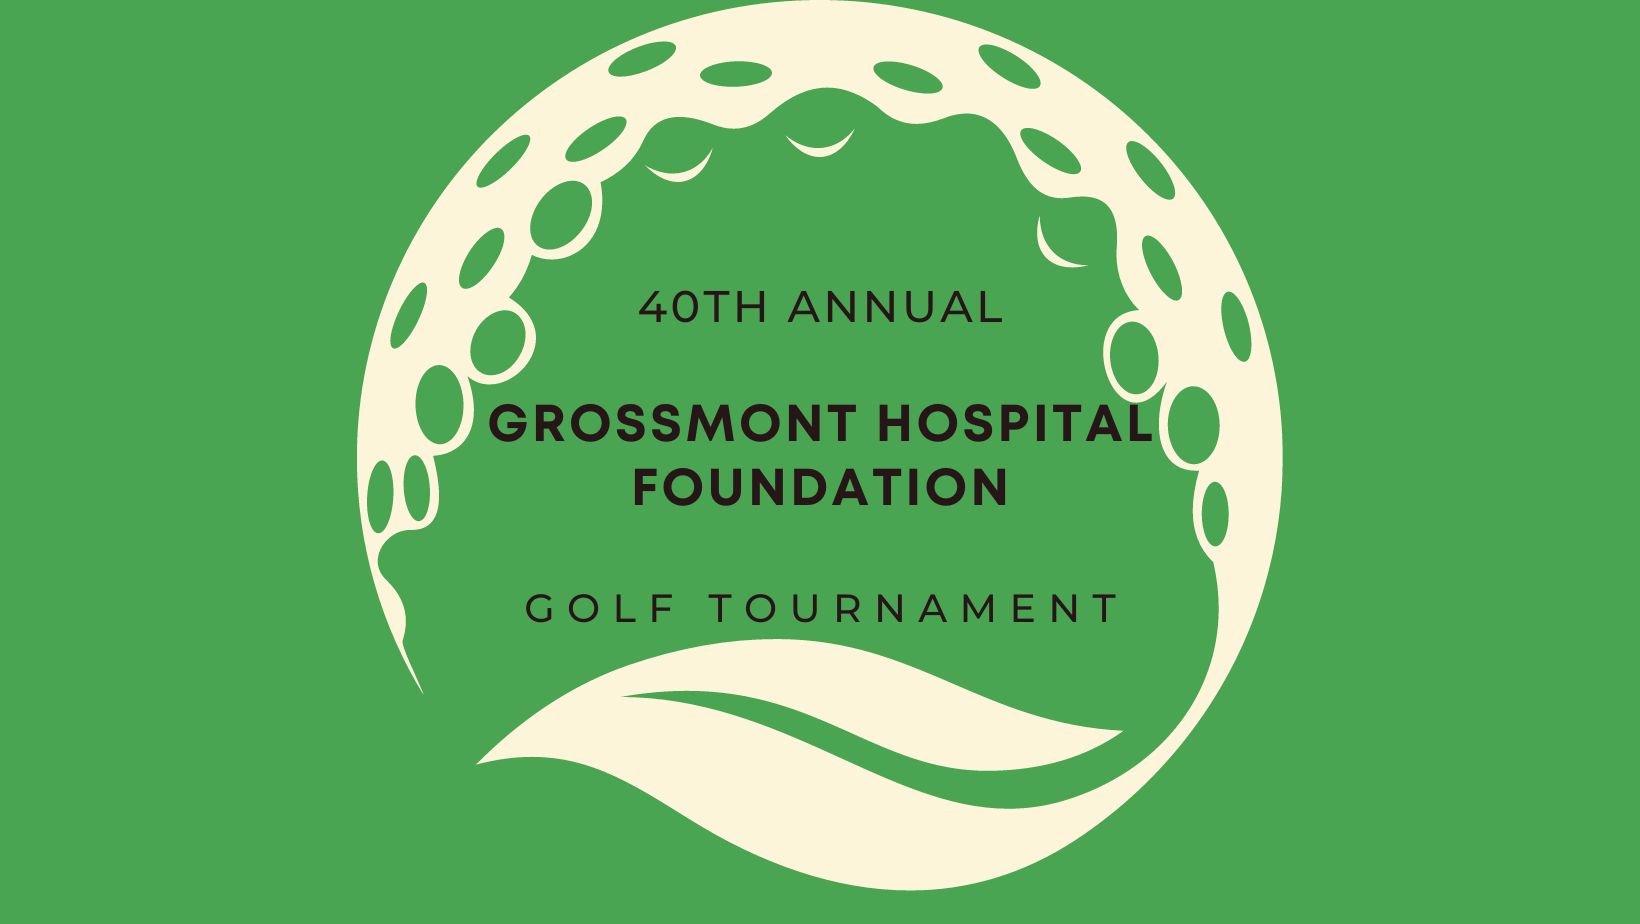 40th Annual Grossmont Hospital Foundation Golf Tournament logo